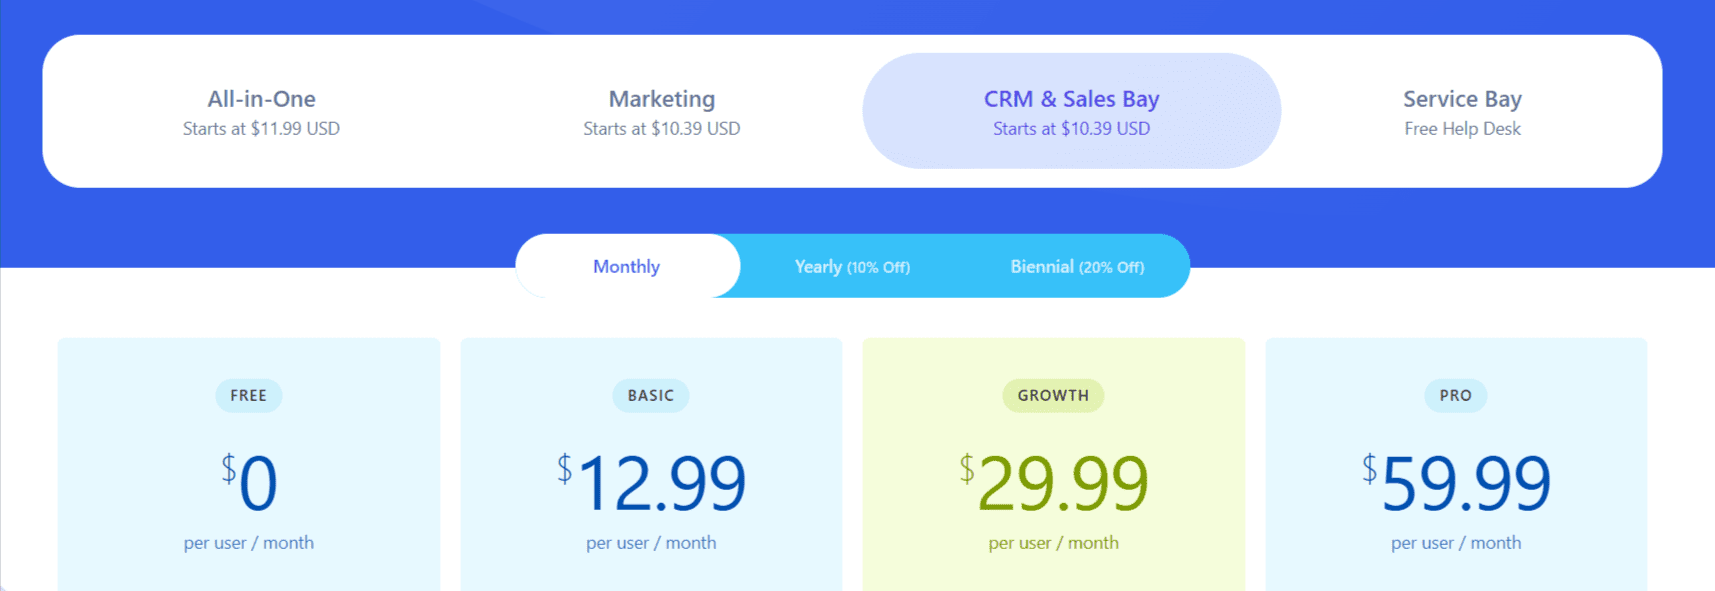 EngageBay CRM & Sales Bay pricing